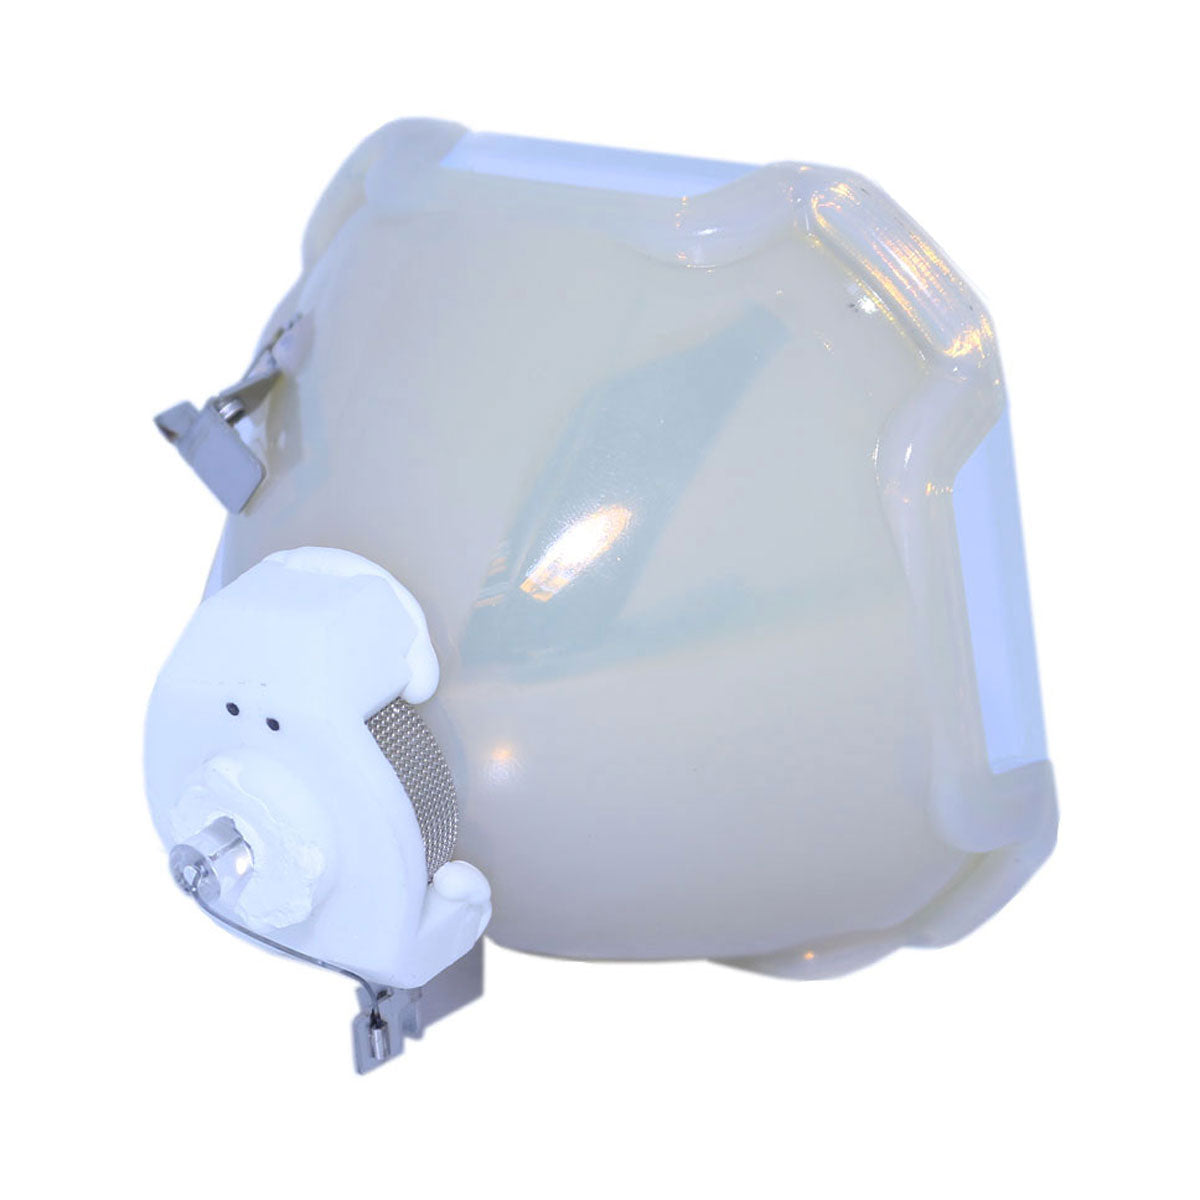 Christie 003-120598-01 Ushio Projector Bare Lamp